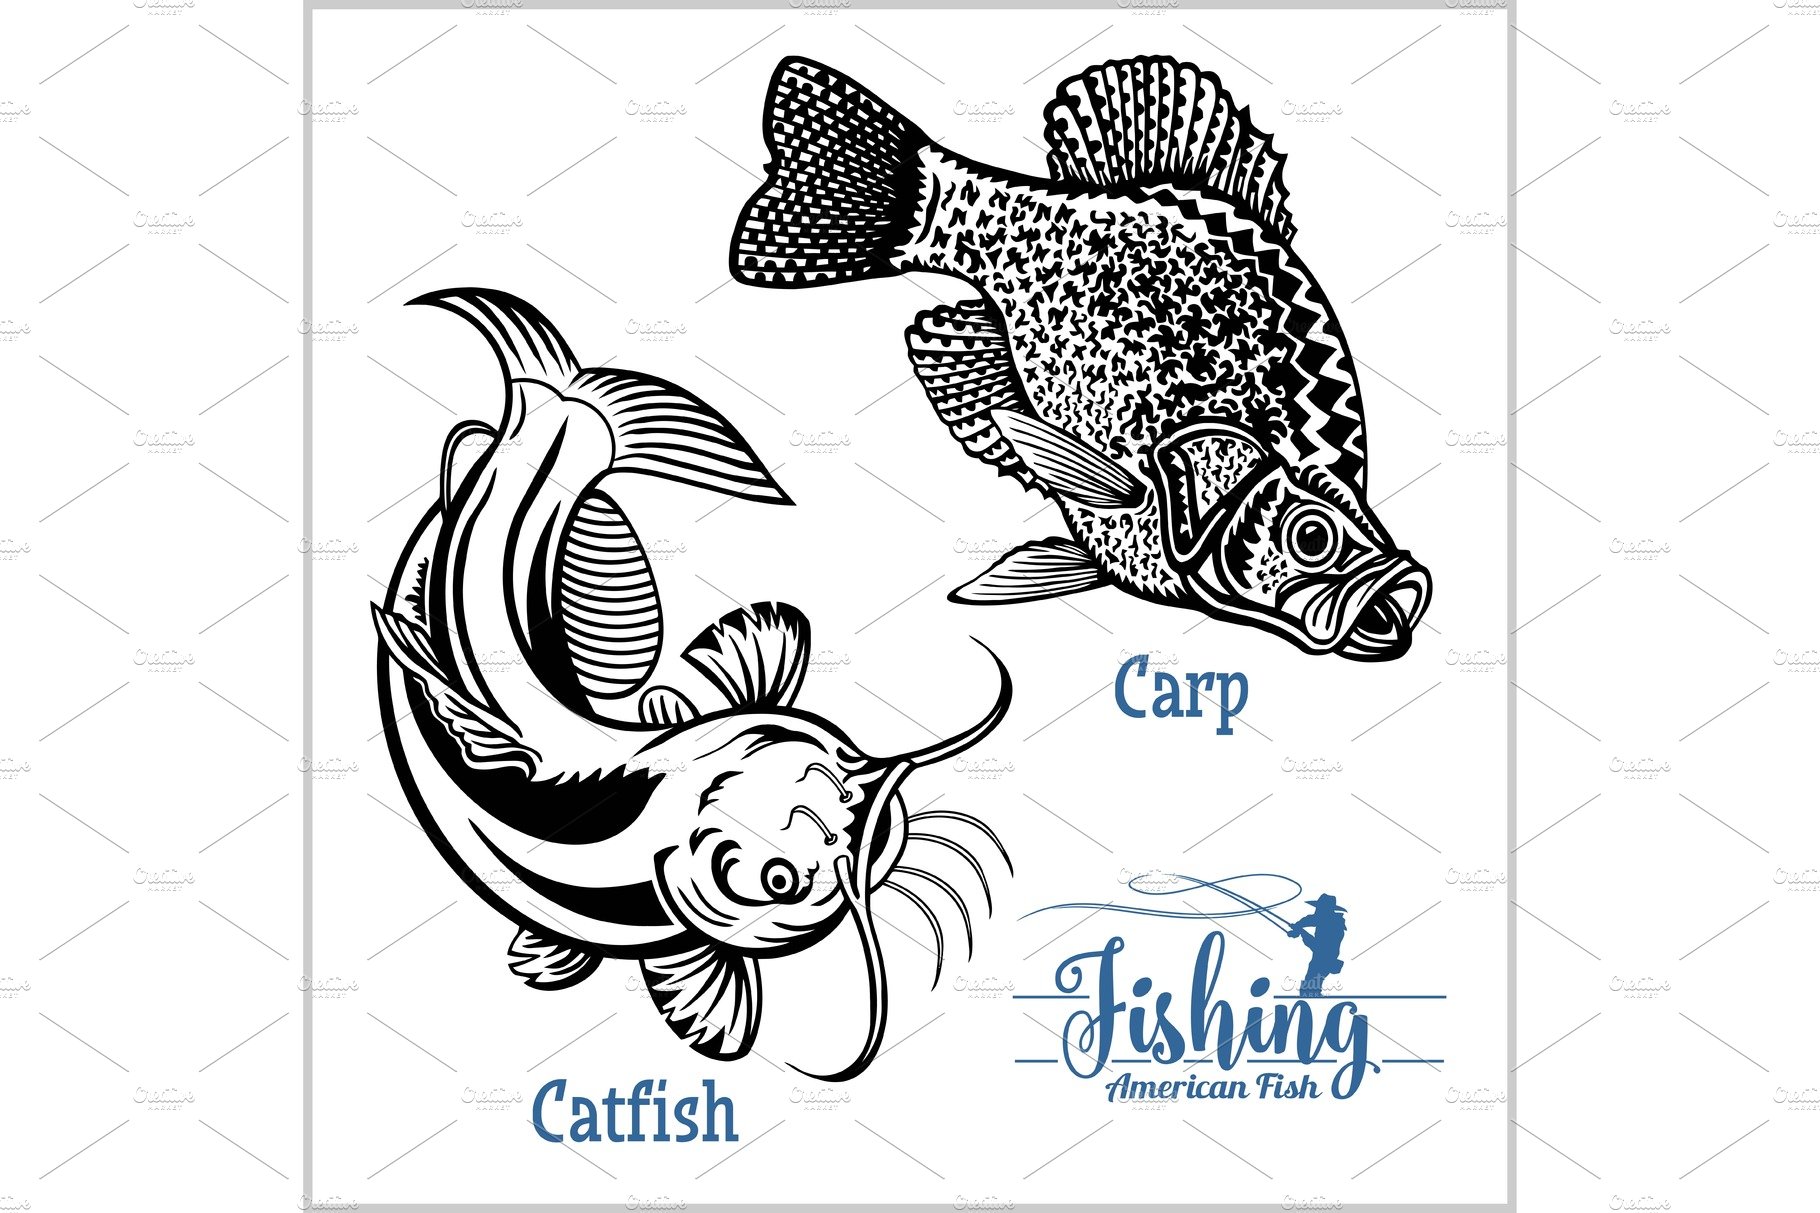 Catfish and Carp fishing on usa cover image.